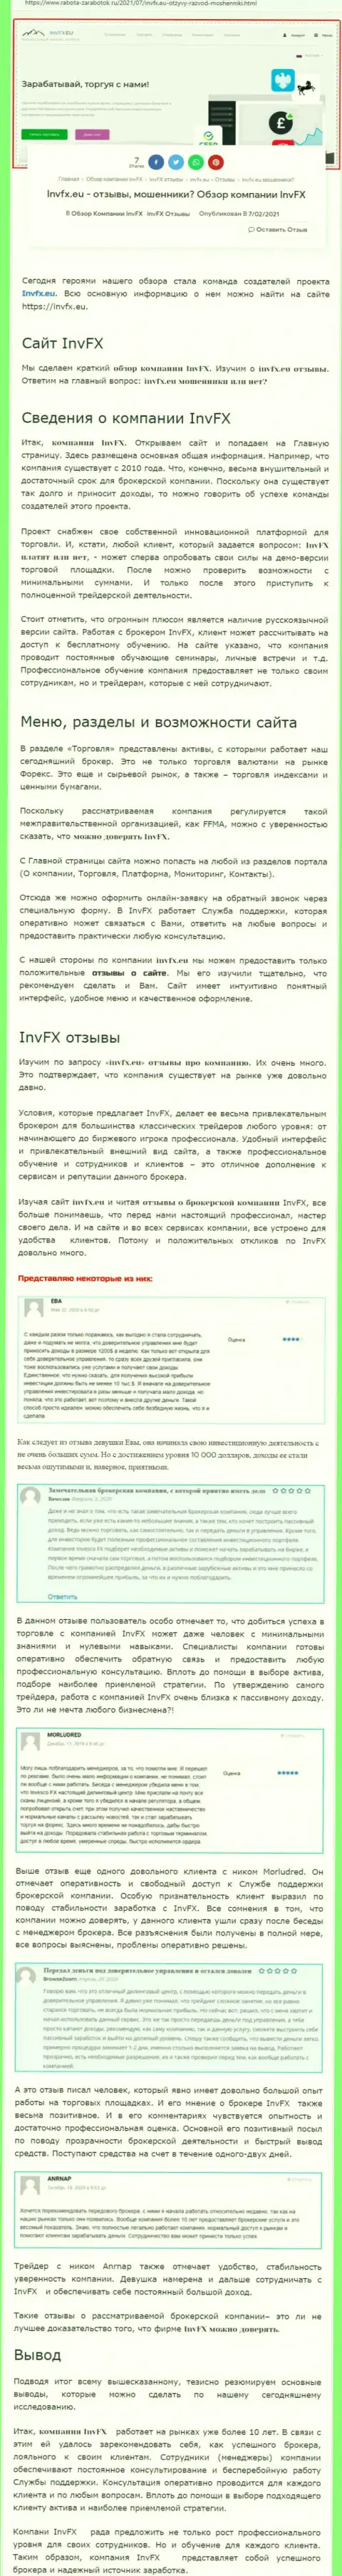 Материал web-сервиса rabota-zarabotok ru о форекс дилинговой компании ИНВФХ